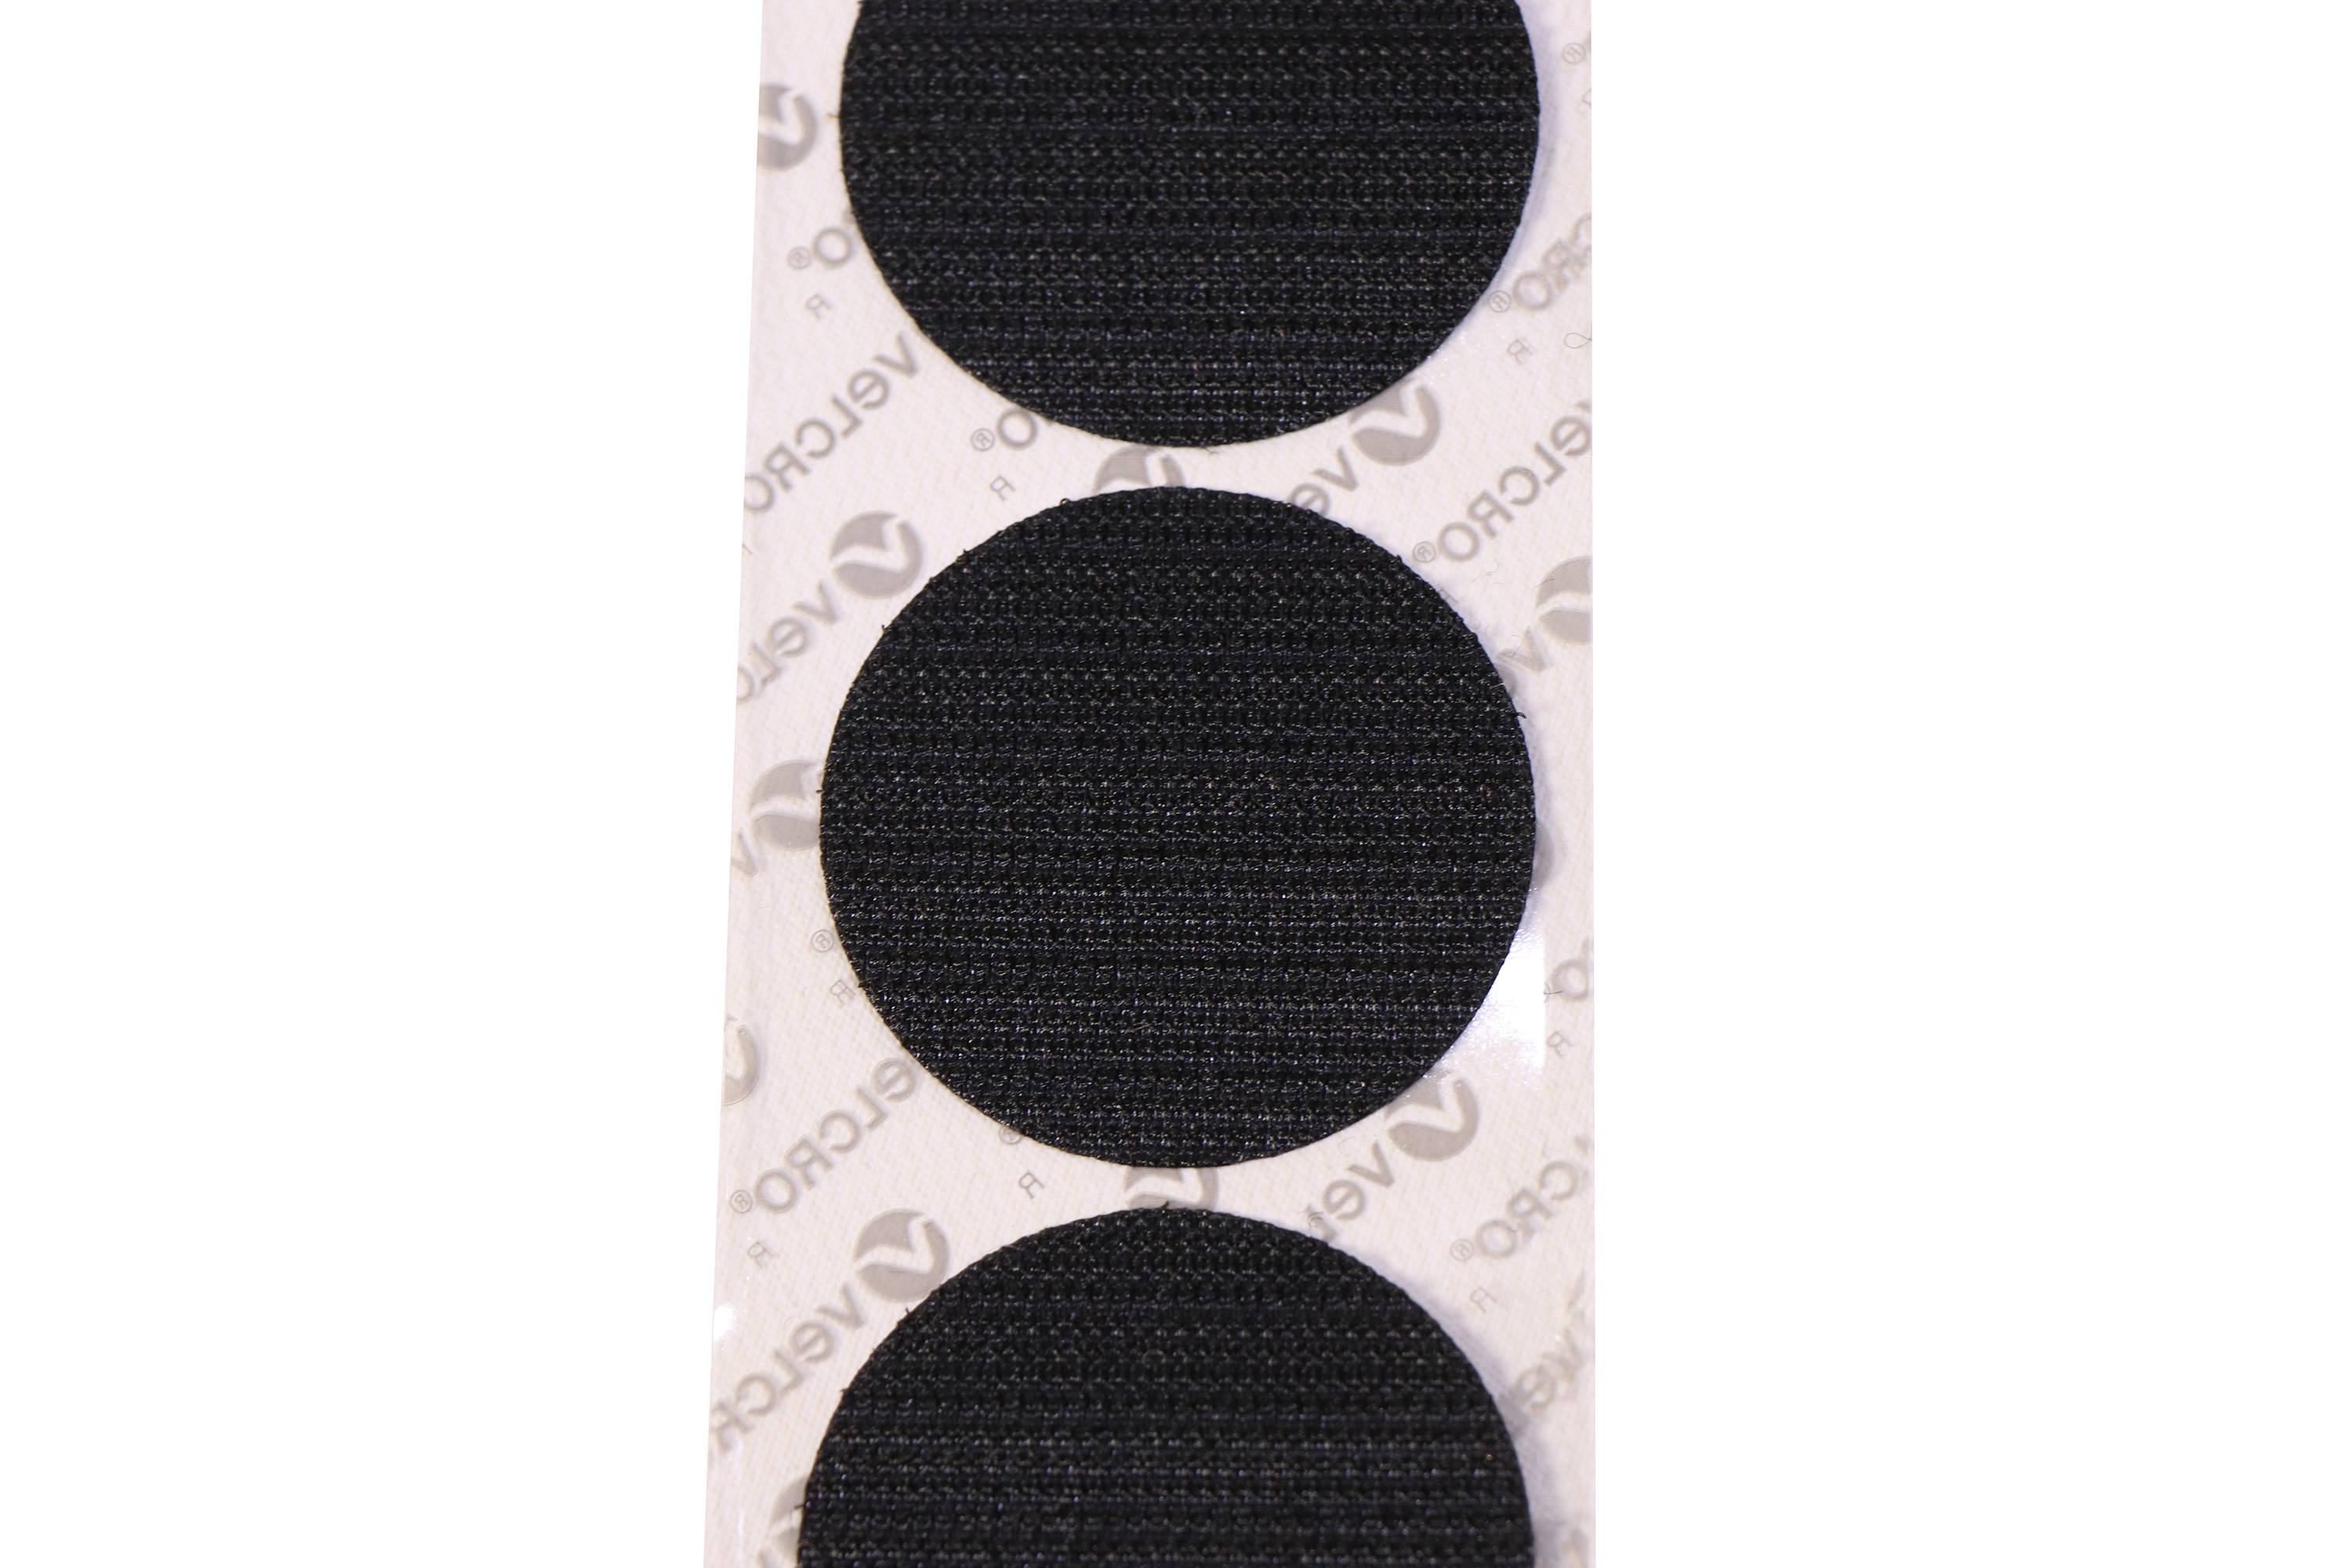 Velcro Brand VELCOIN Helmet Pad Circular Replacement Hook Coins